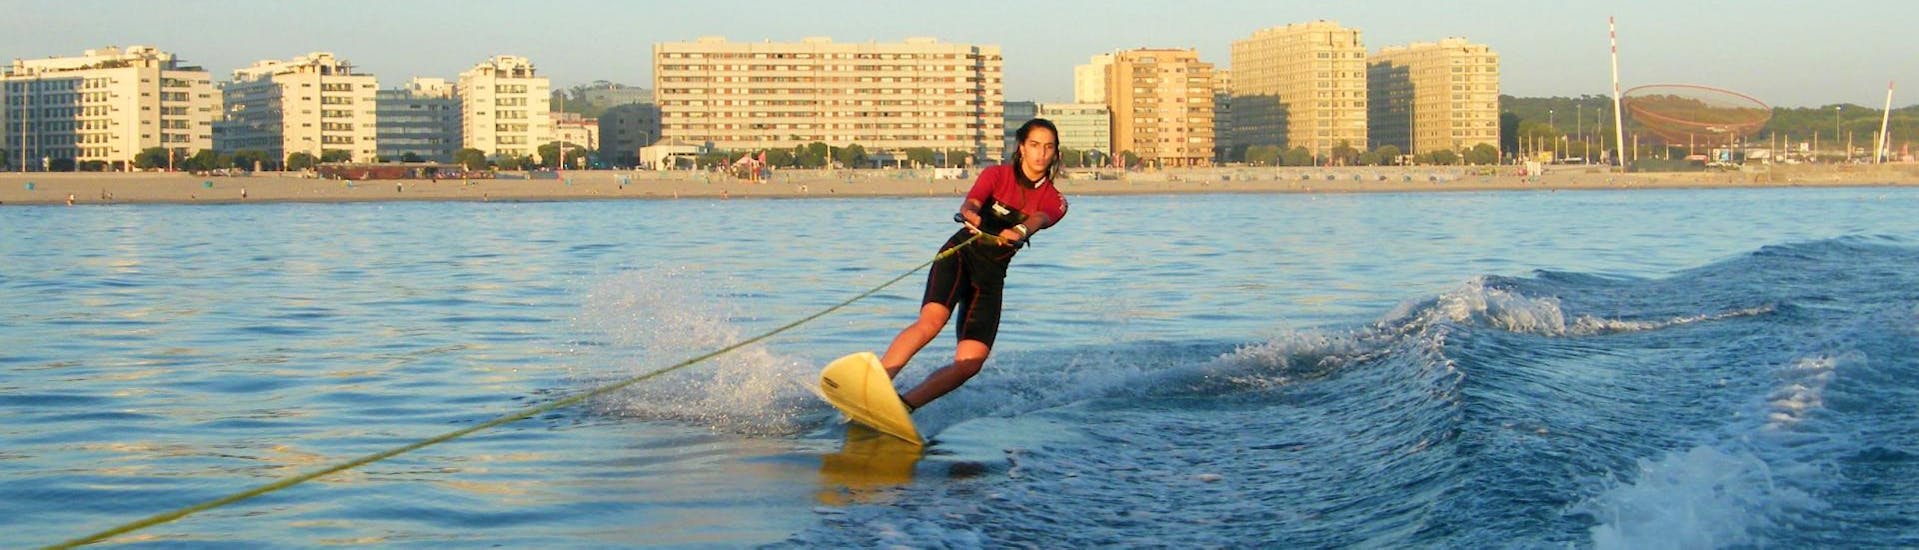 Wakeboarding in Matosinhos - Matosinhos Beach.